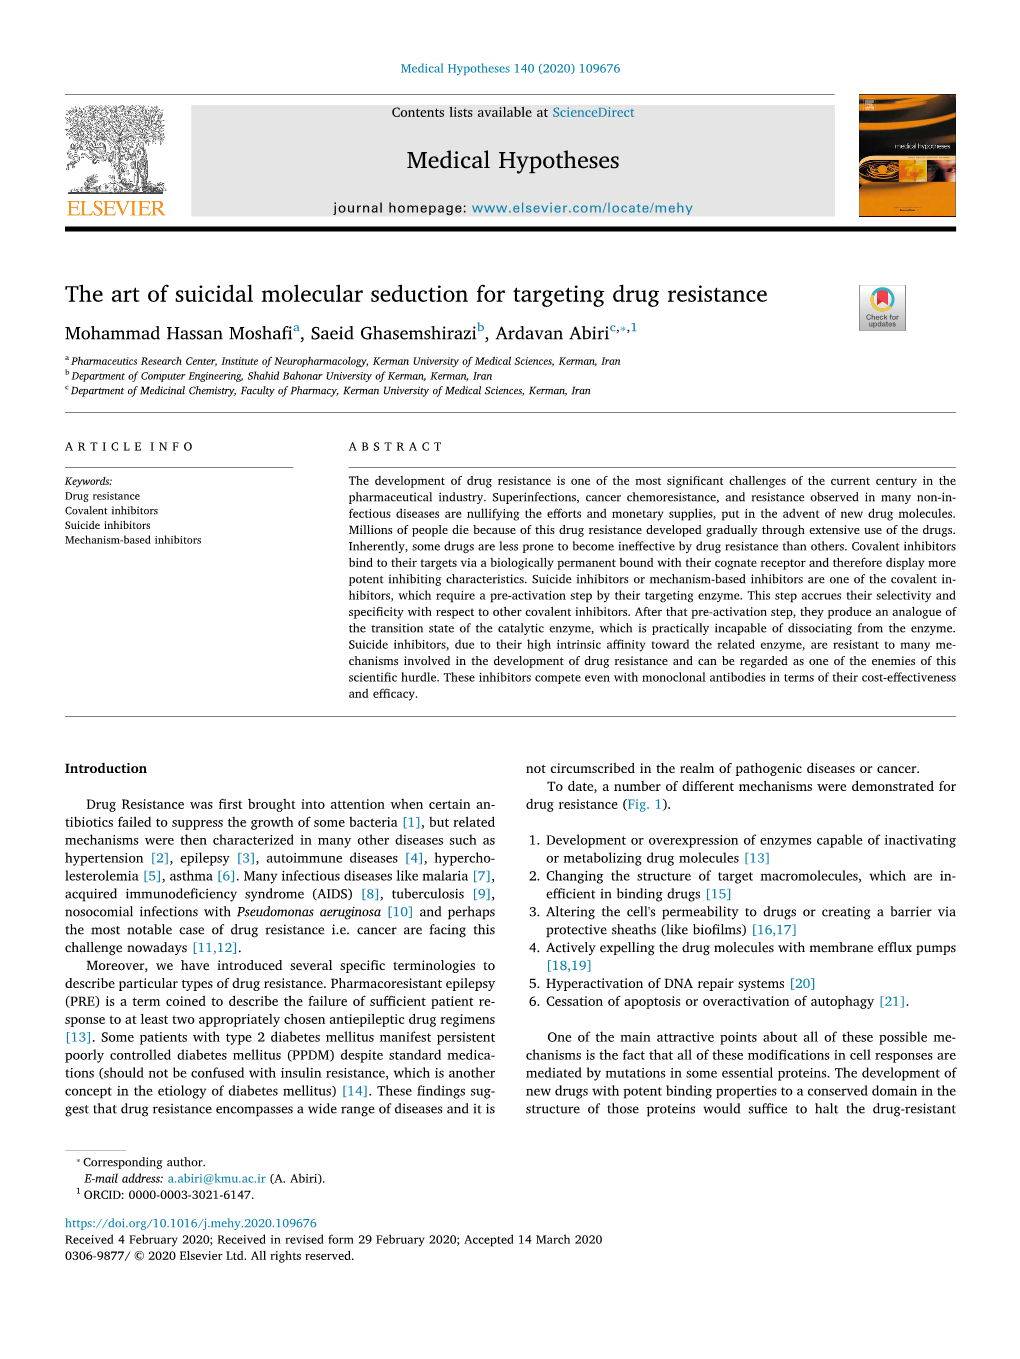 The Art of Suicidal Molecular Seduction for Targeting Drug Resistance